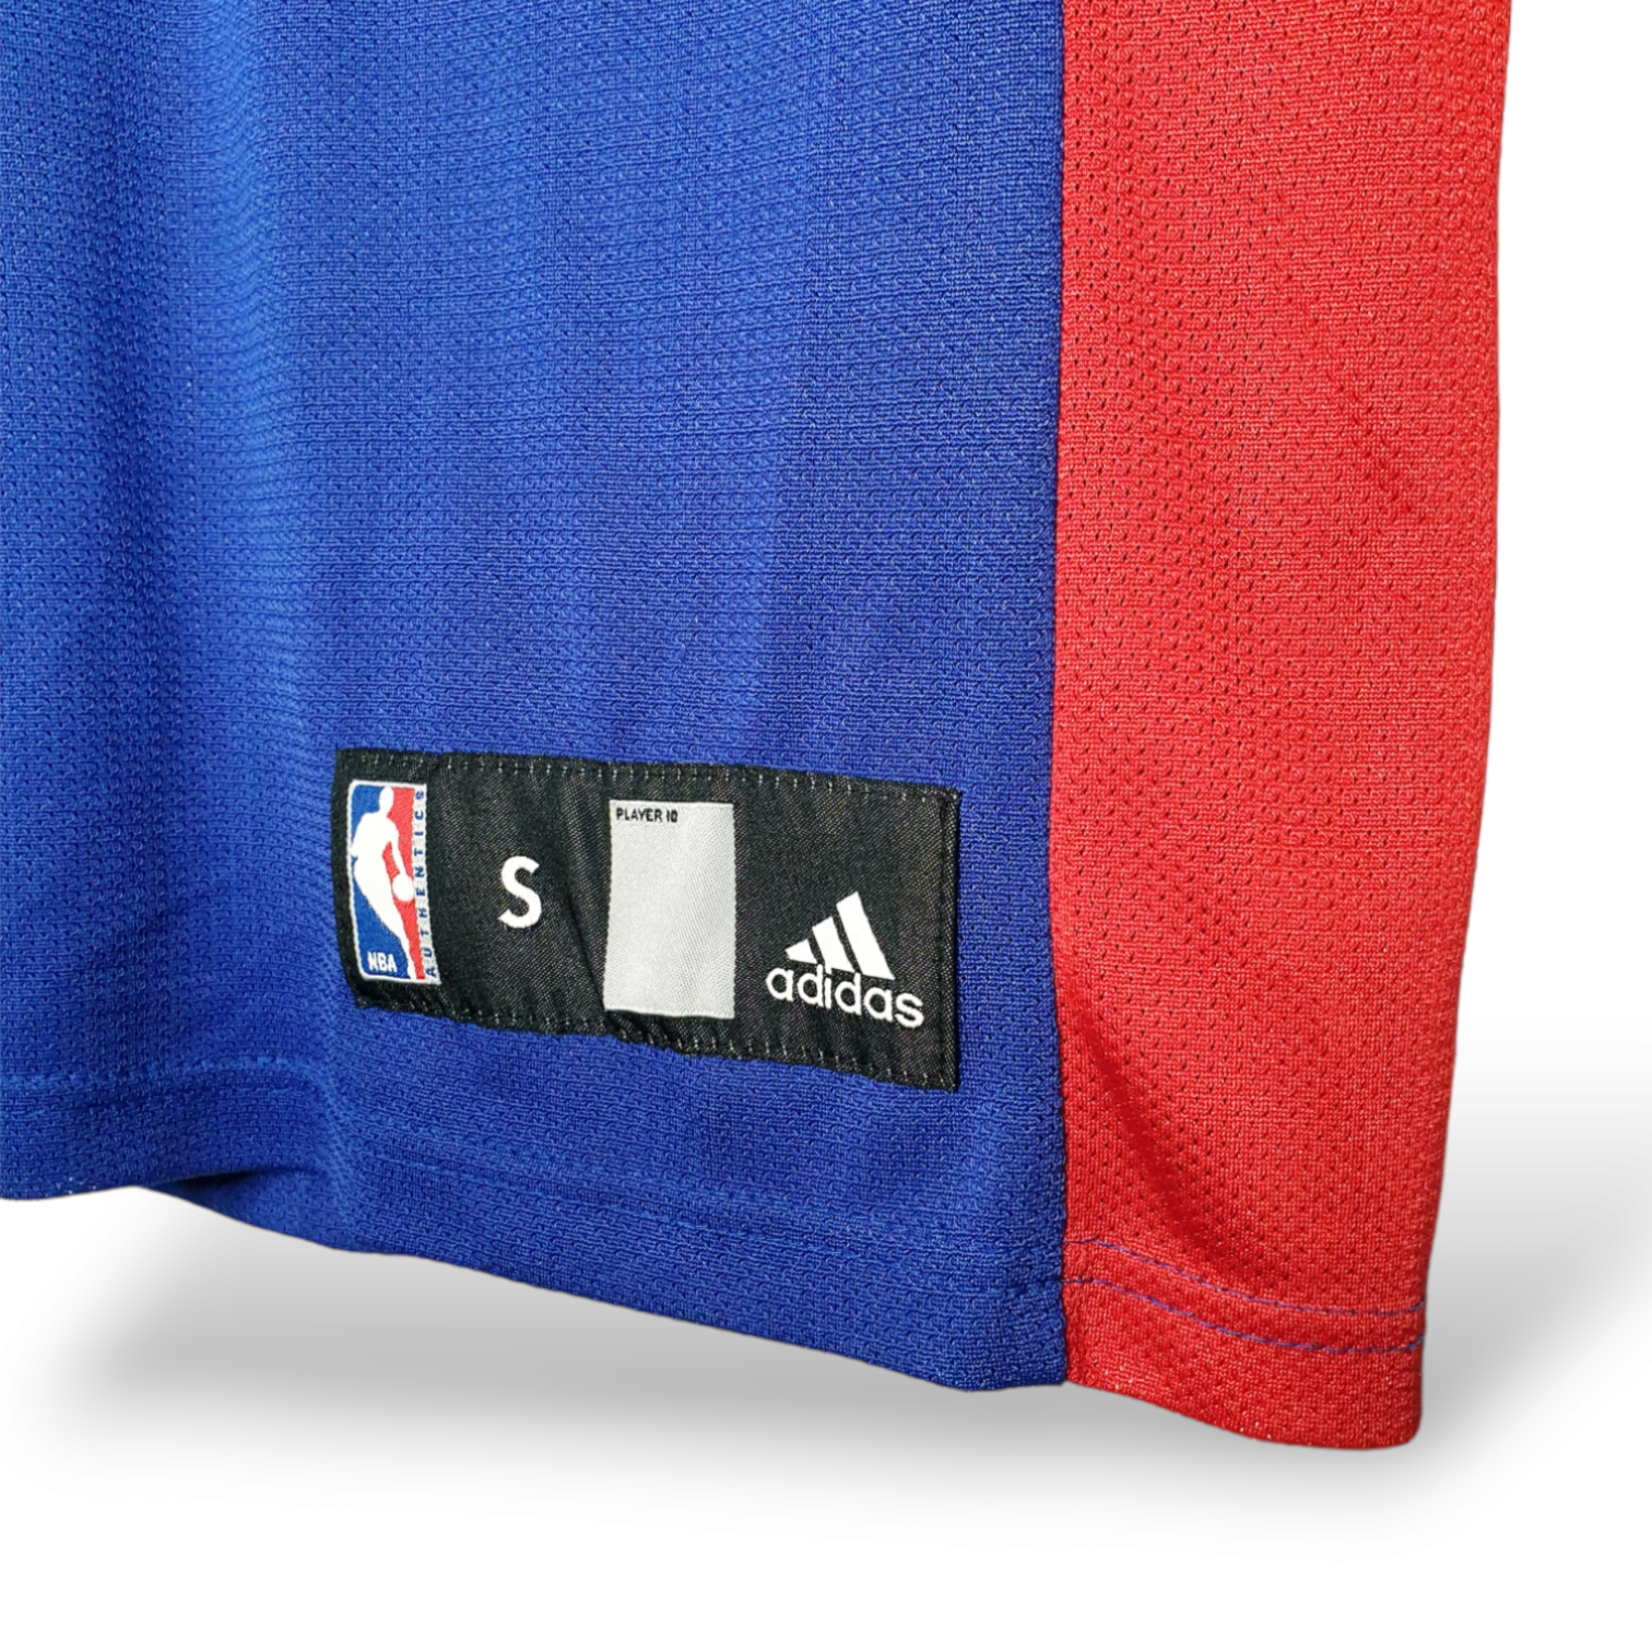 Adidas Original Adidas vintage NBA basketball kit Detroit Pistons 2006/08